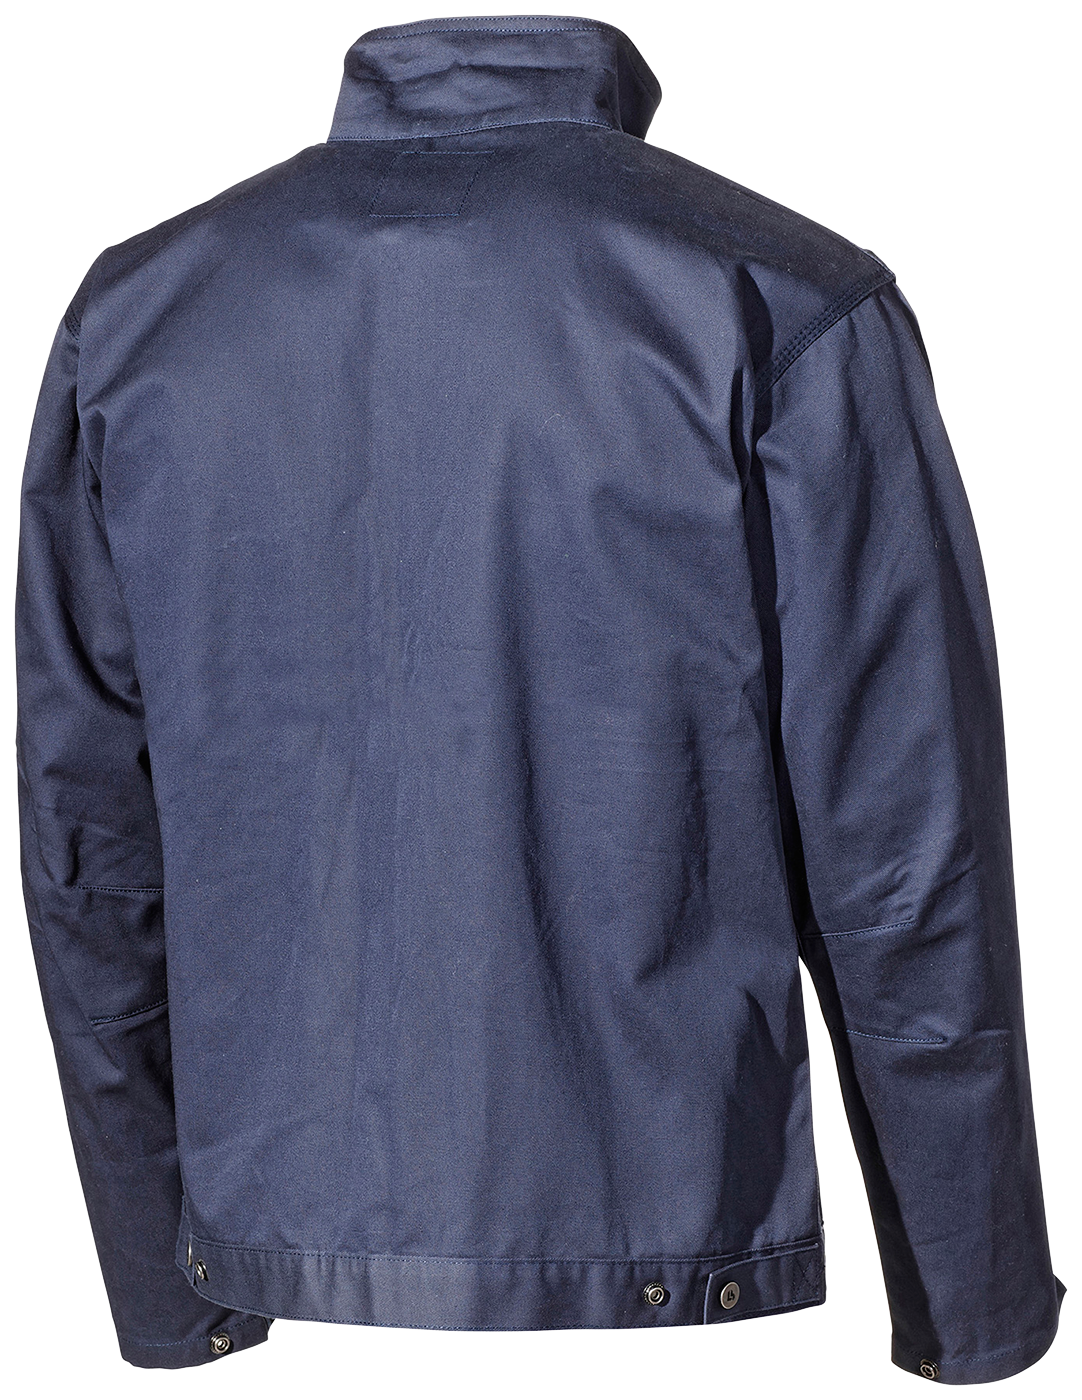 Jacket L.Brador 2021B – L.Brador